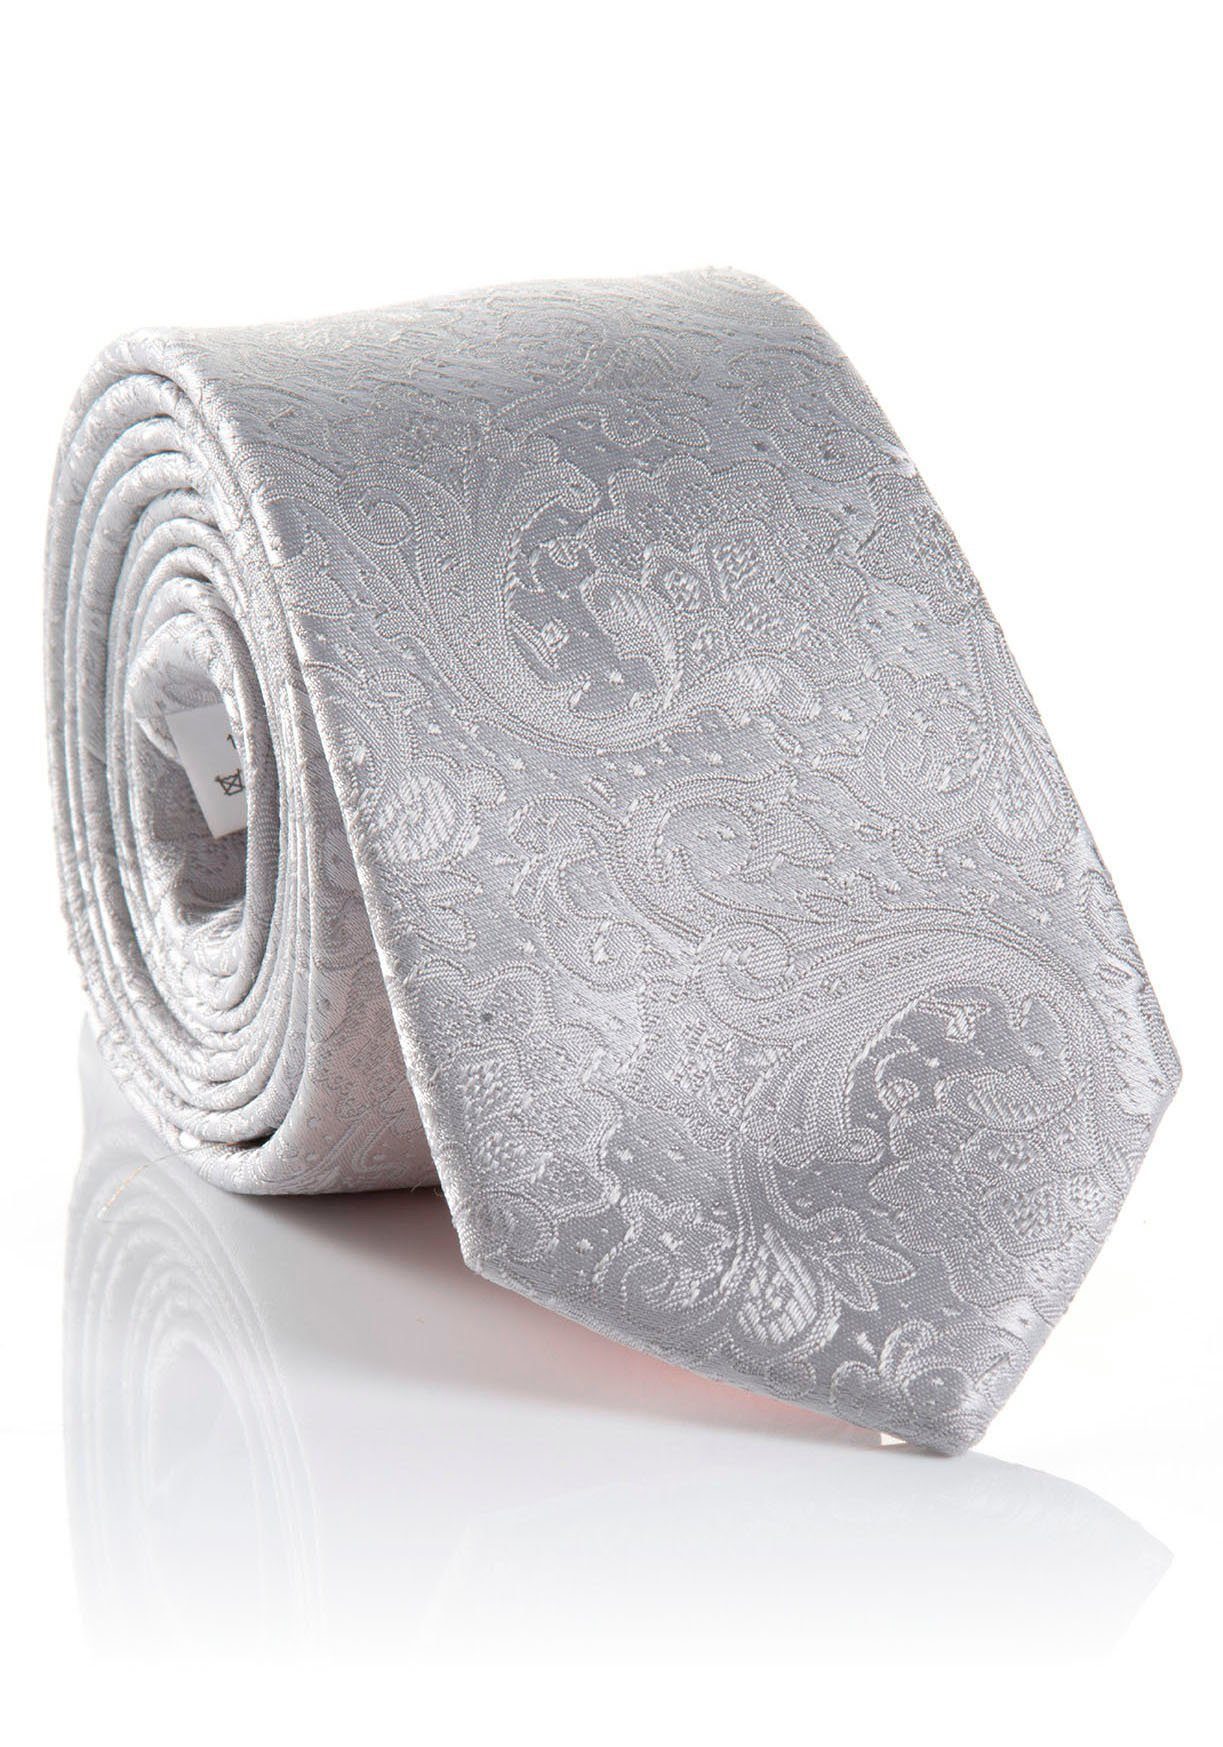 aus reiner Seide, Krawatte MONTI Paisley-Muster silver LELIO Krawatte